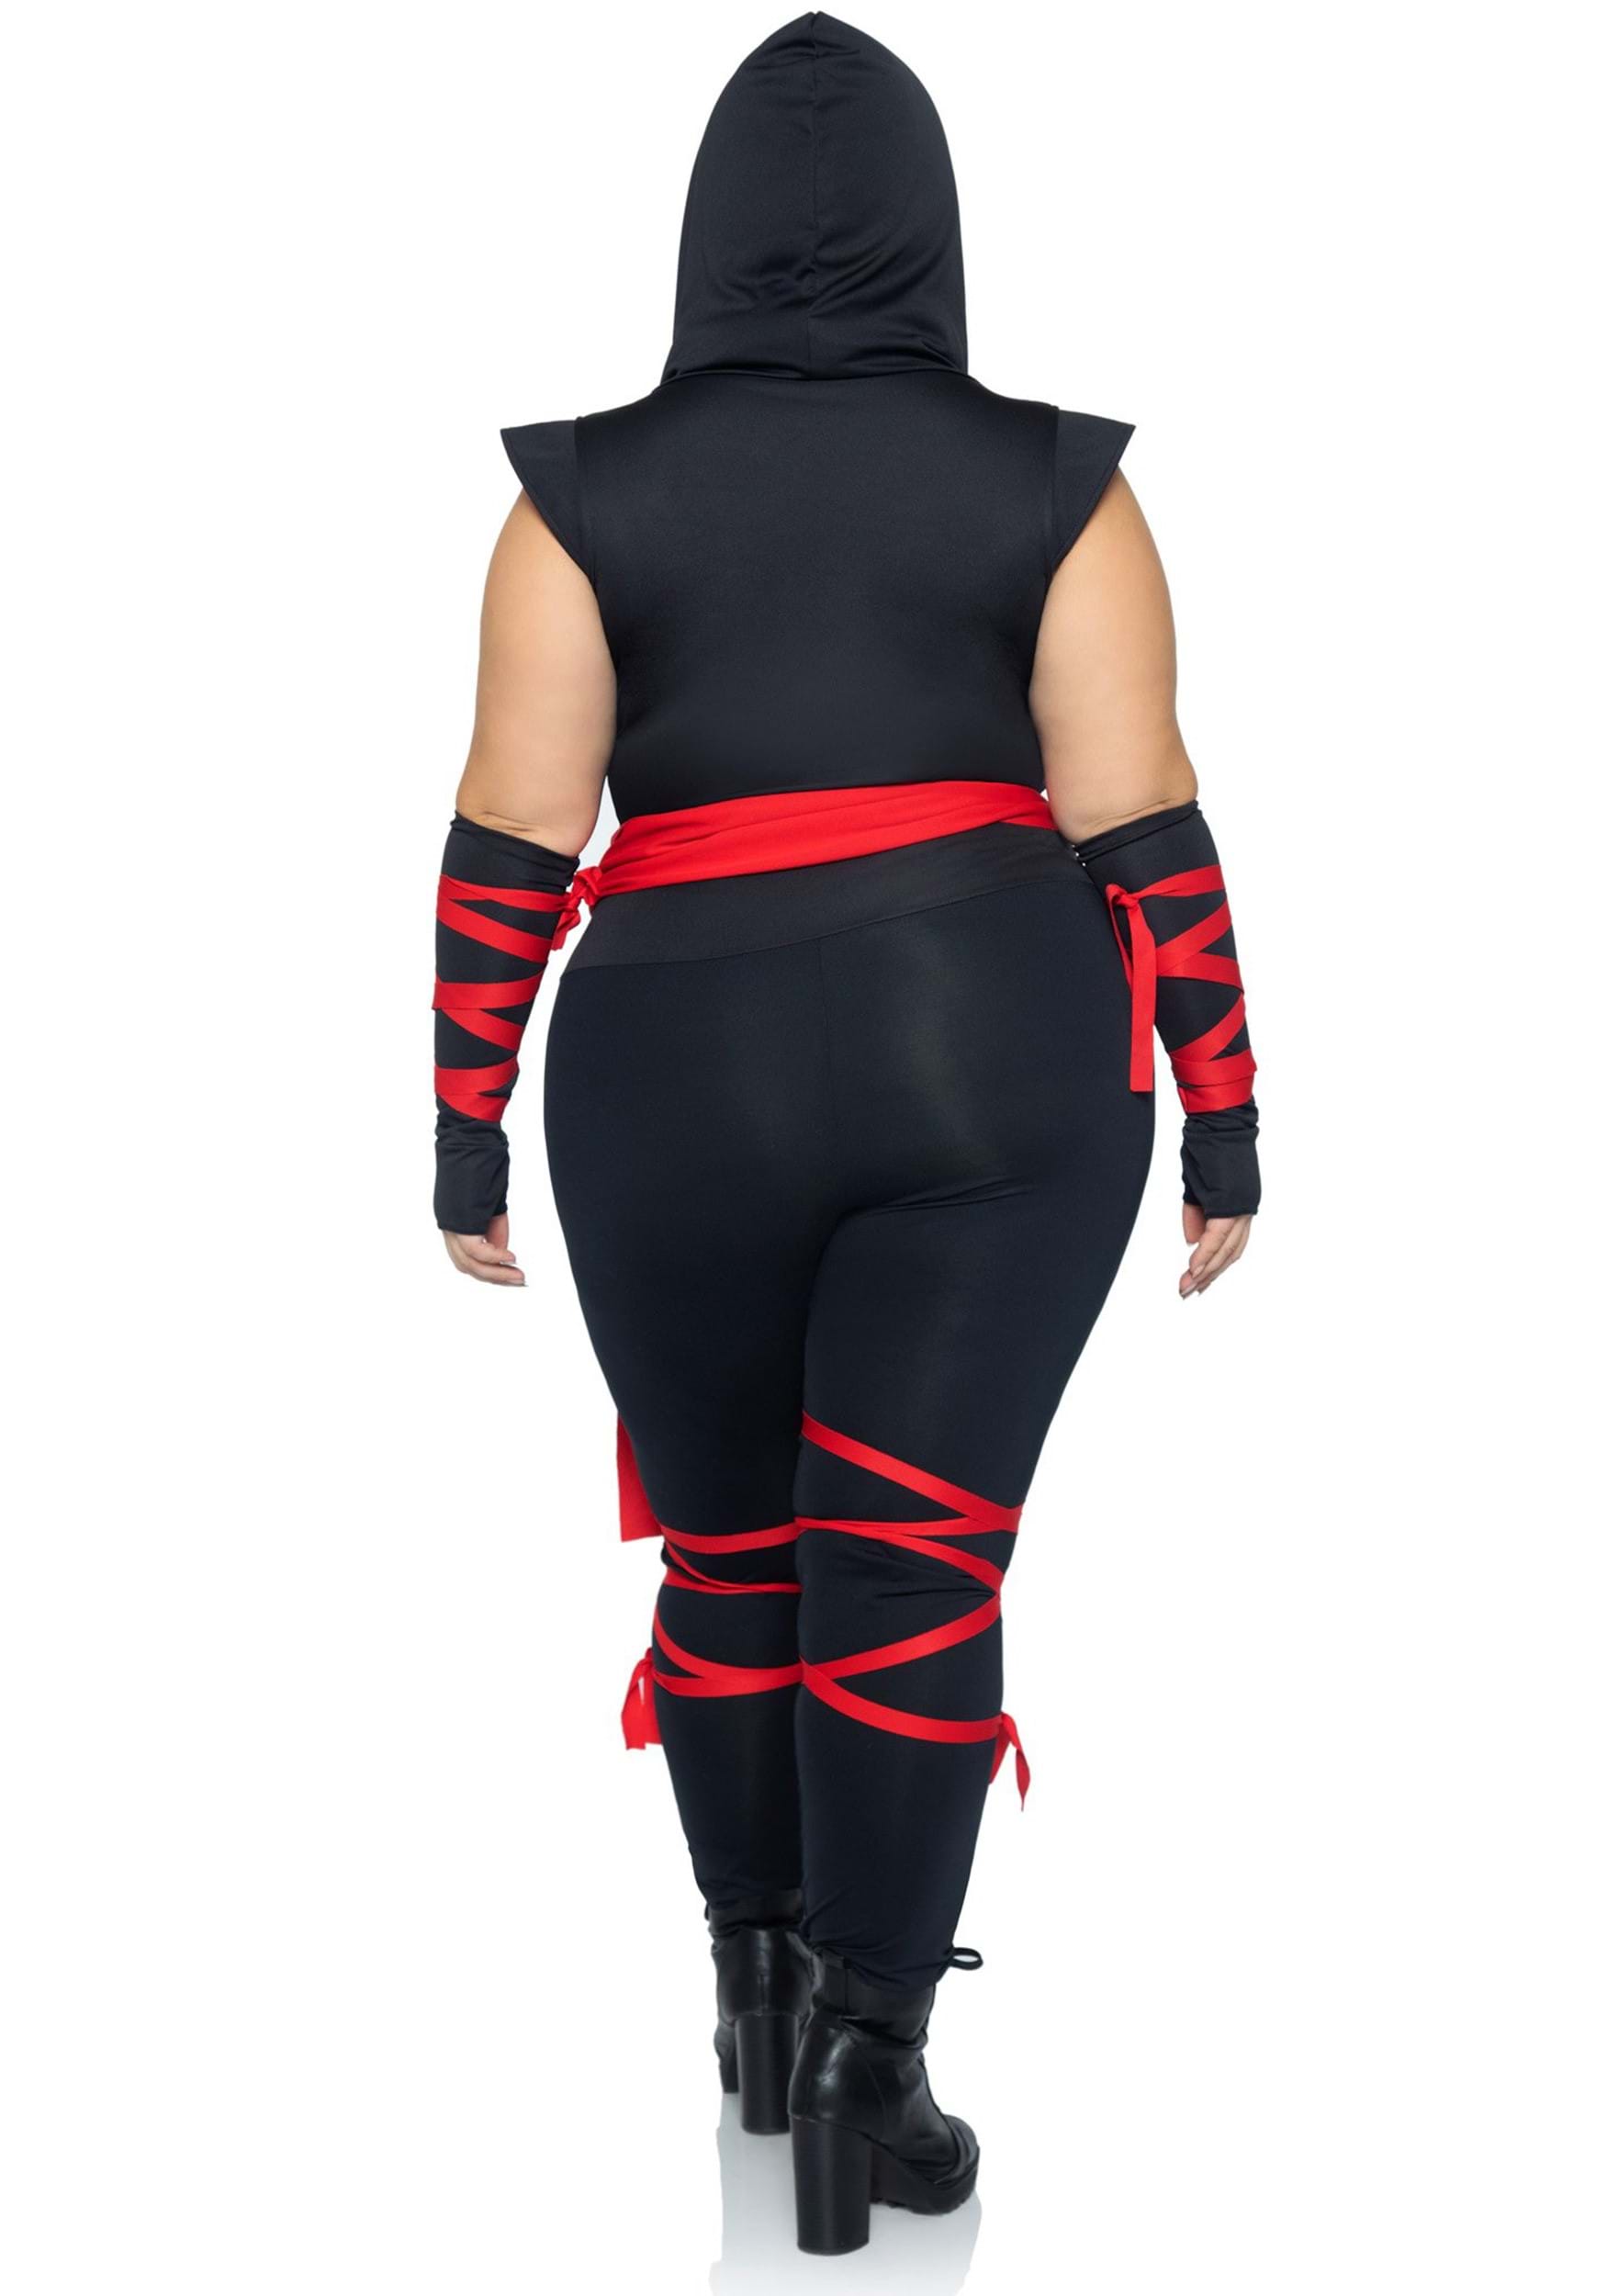 Plus Size Sexy Deadly Ninja Women's Costume